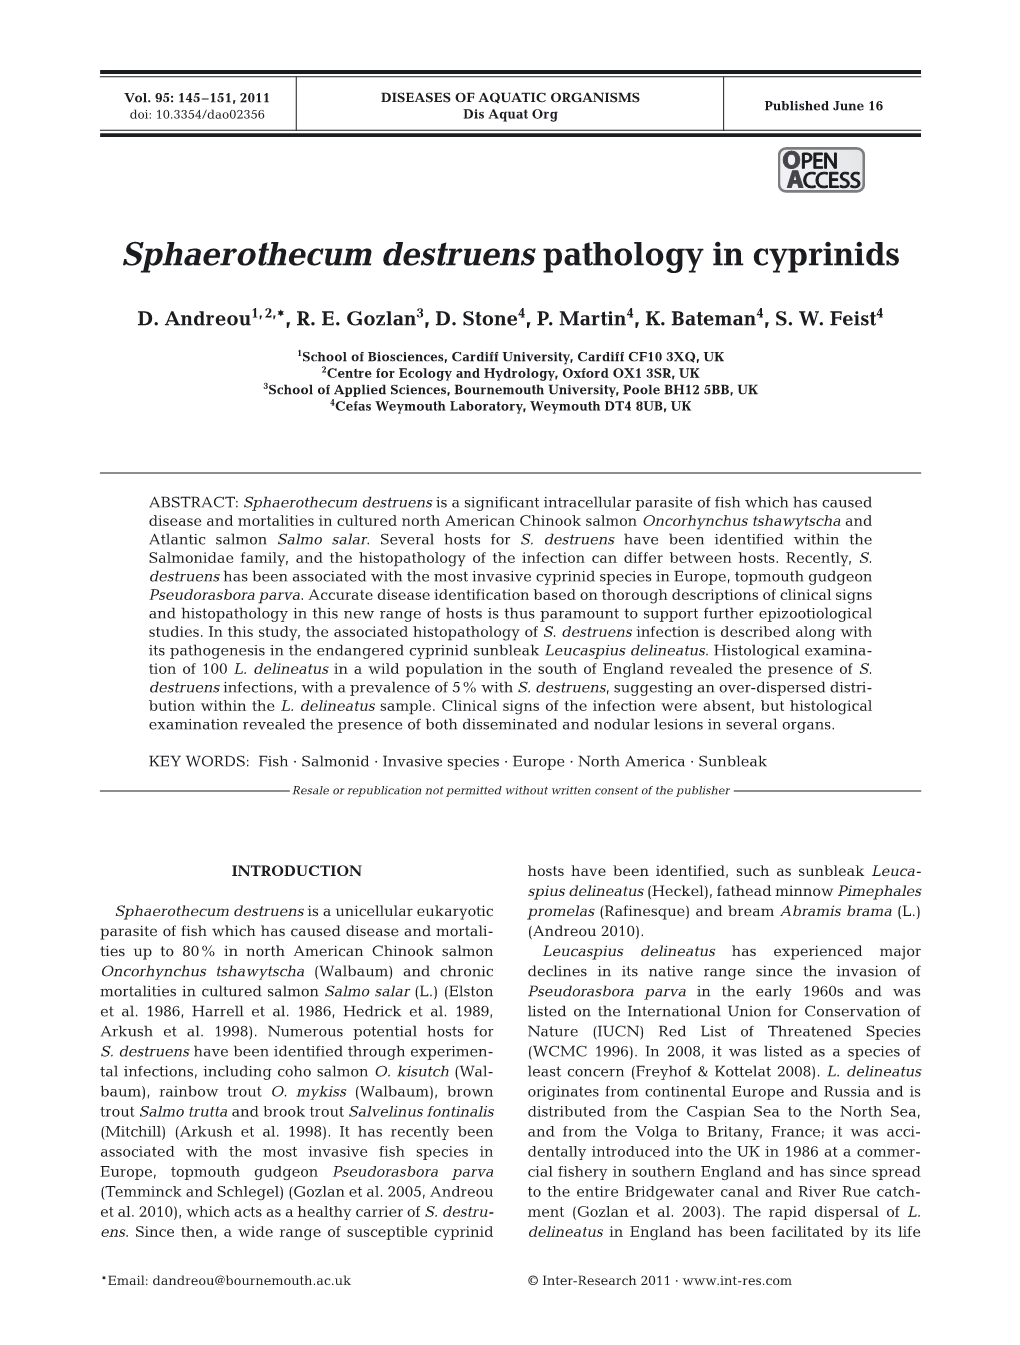 Sphaerothecum Destruens Pathology in Cyprinids